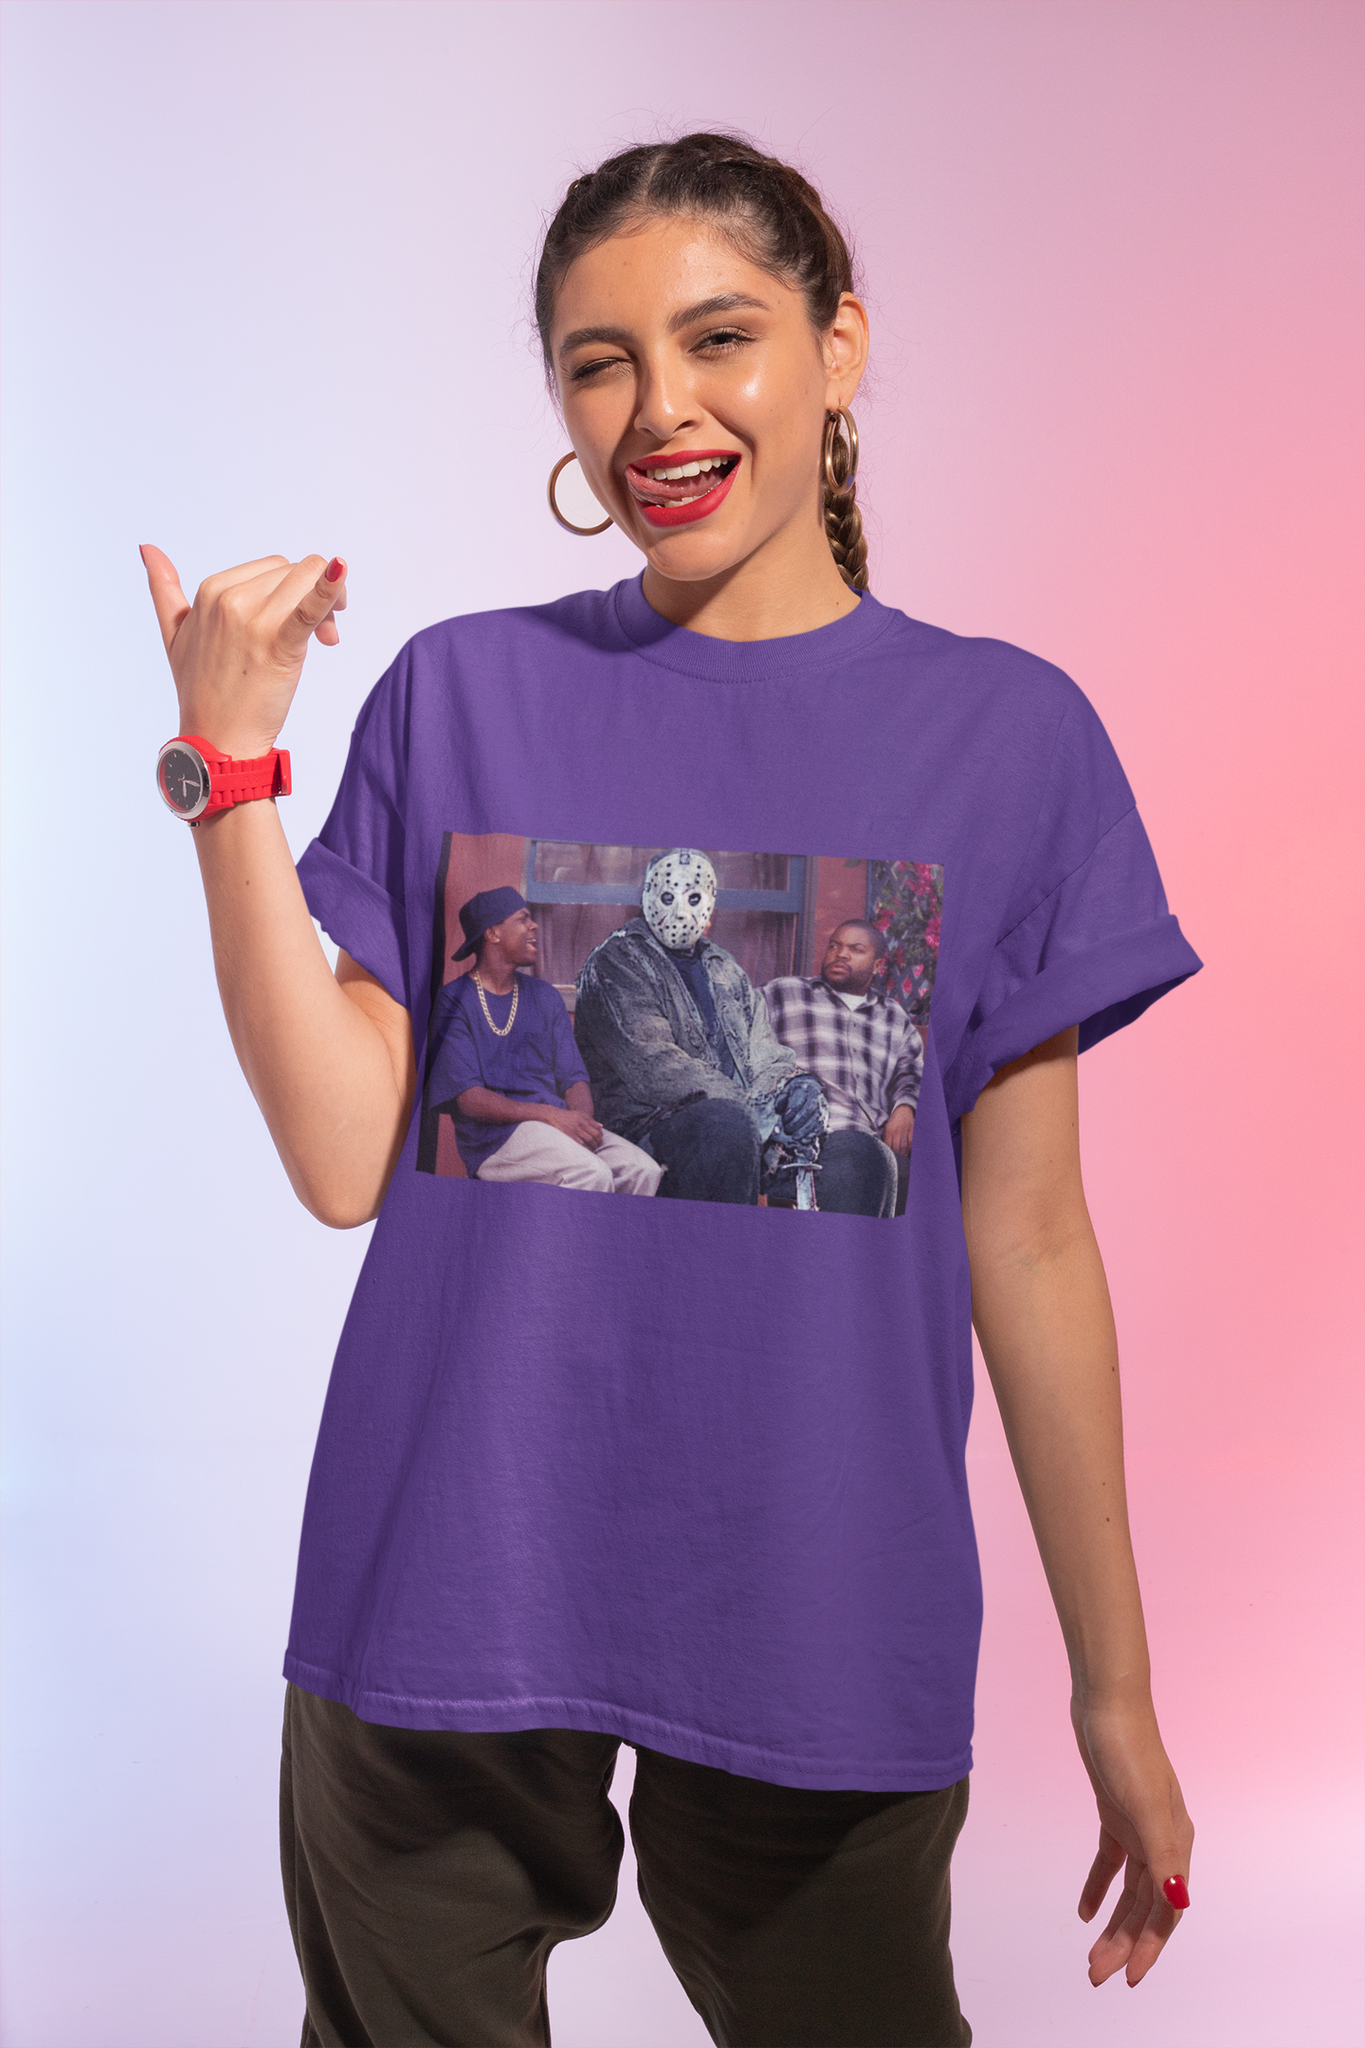 Friday 13th T Shirt, Jason Voorhees Damn Funny Meme Tshirt, Halloween Gifts